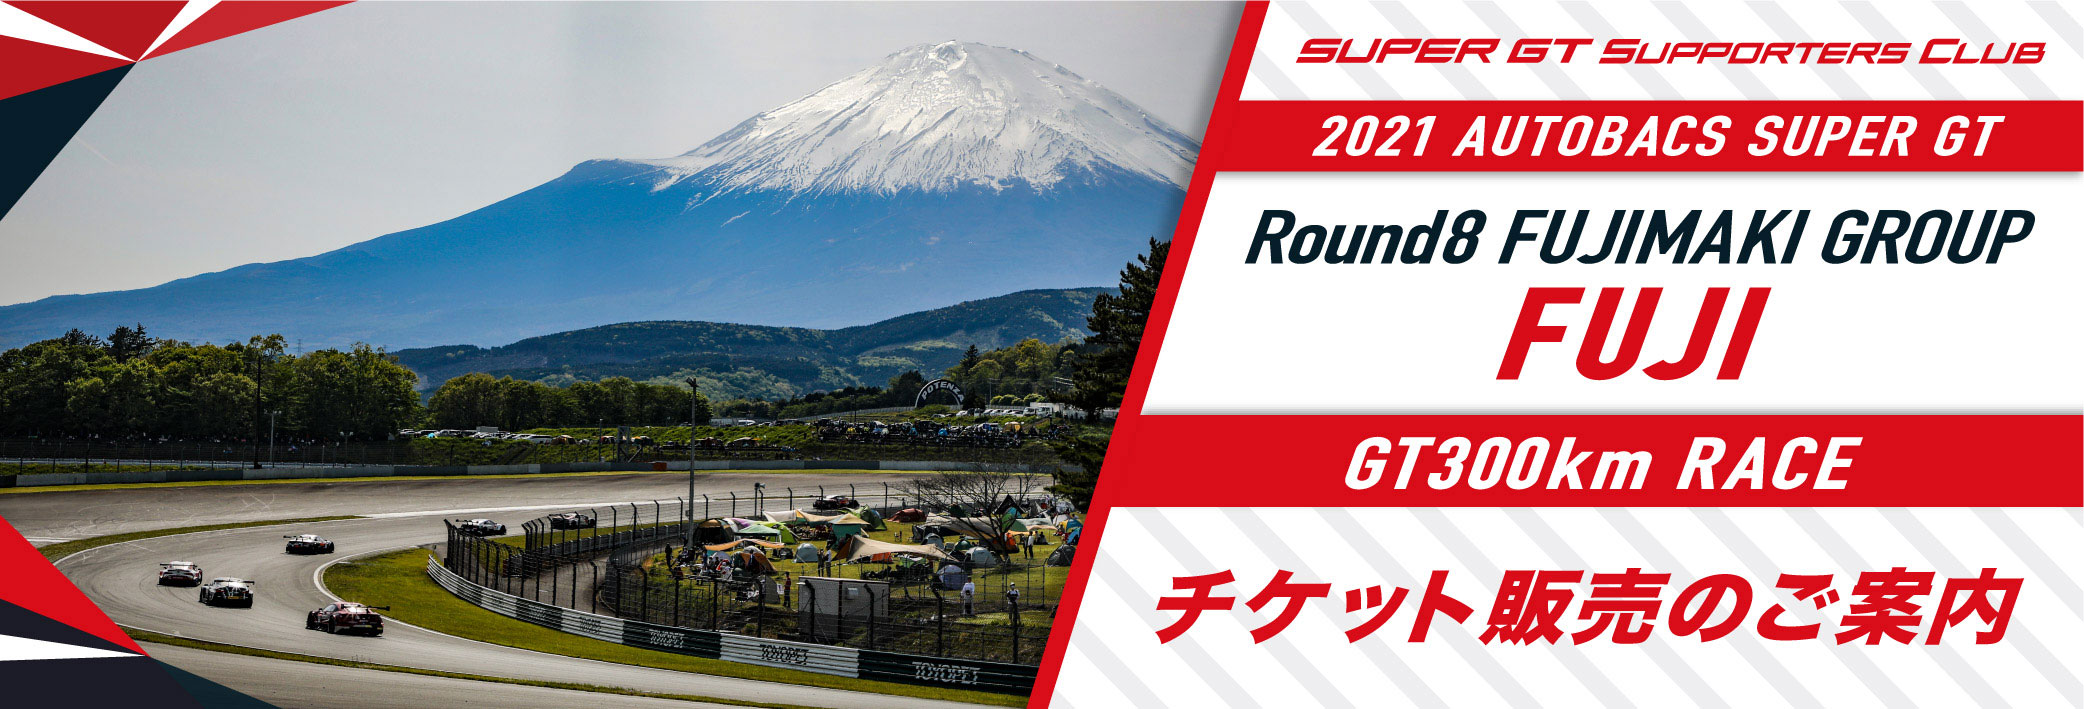 2021 AUTOBACS SUPER GT Round8 FUJIMAKI GROUP FUJI GT 300km RACEチケット販売のご案内